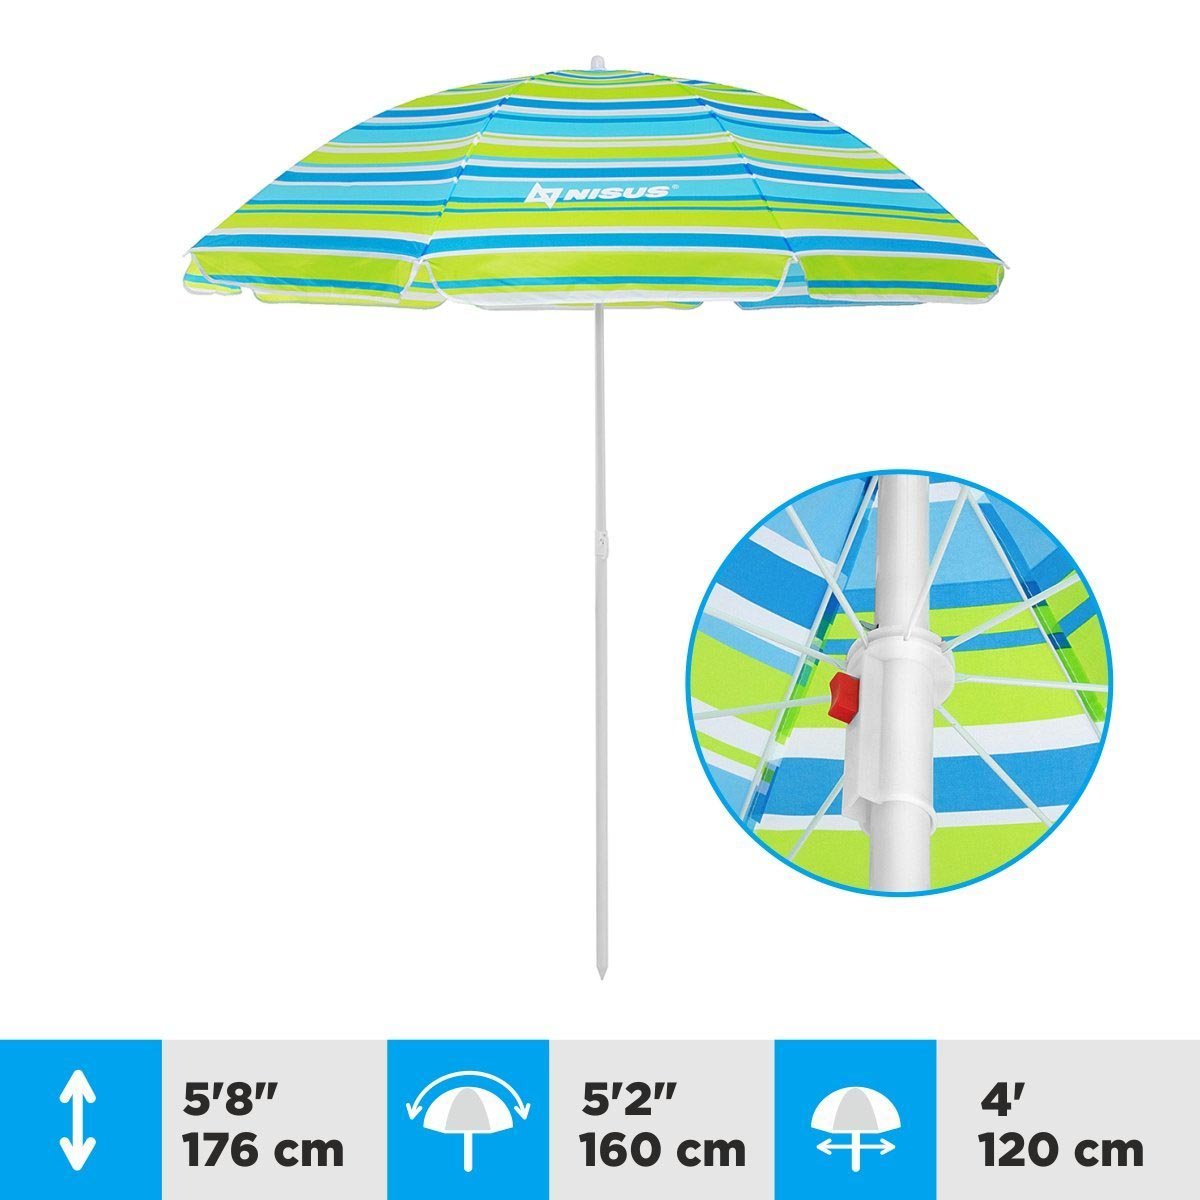 A 4 ft Sea-Green Folding Beach Umbrella is 5.8 ft high